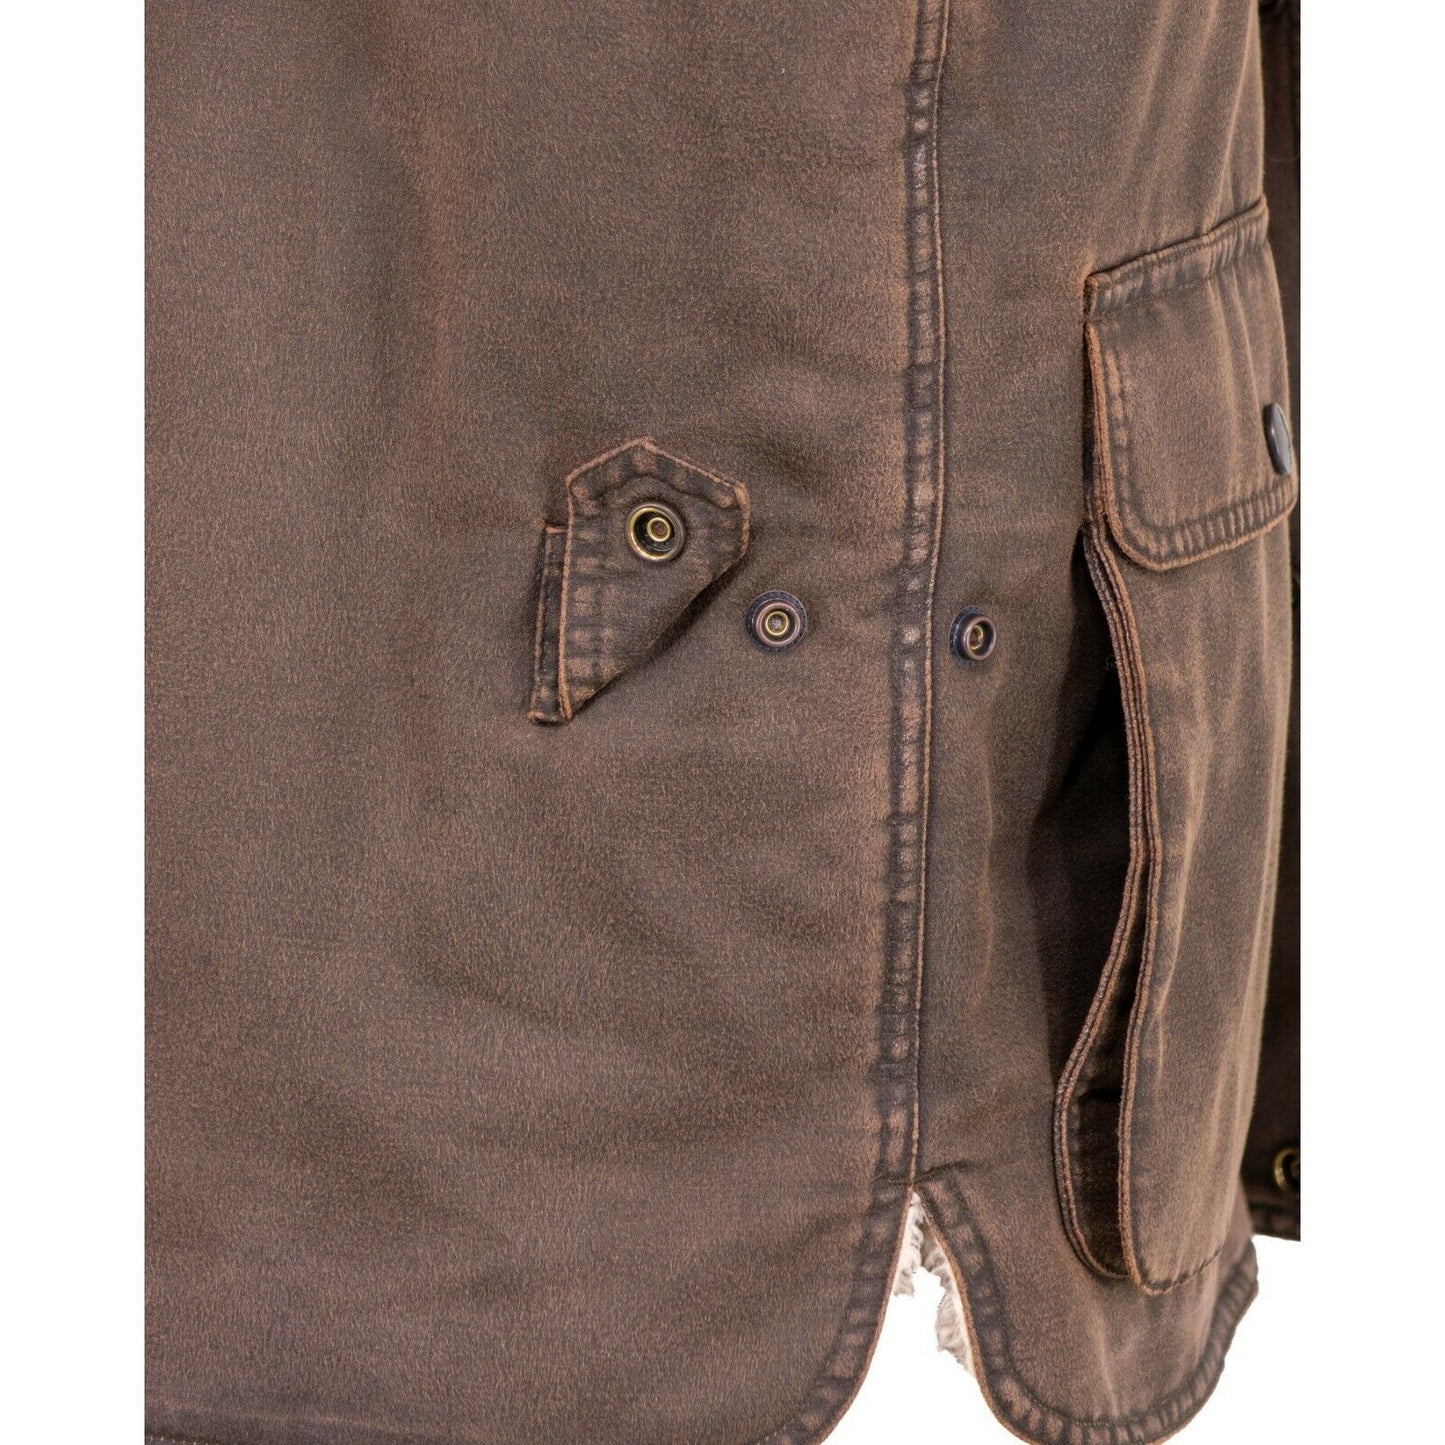 Outback Trading Company® Men's Cobar Brown Vests 29742-BRN